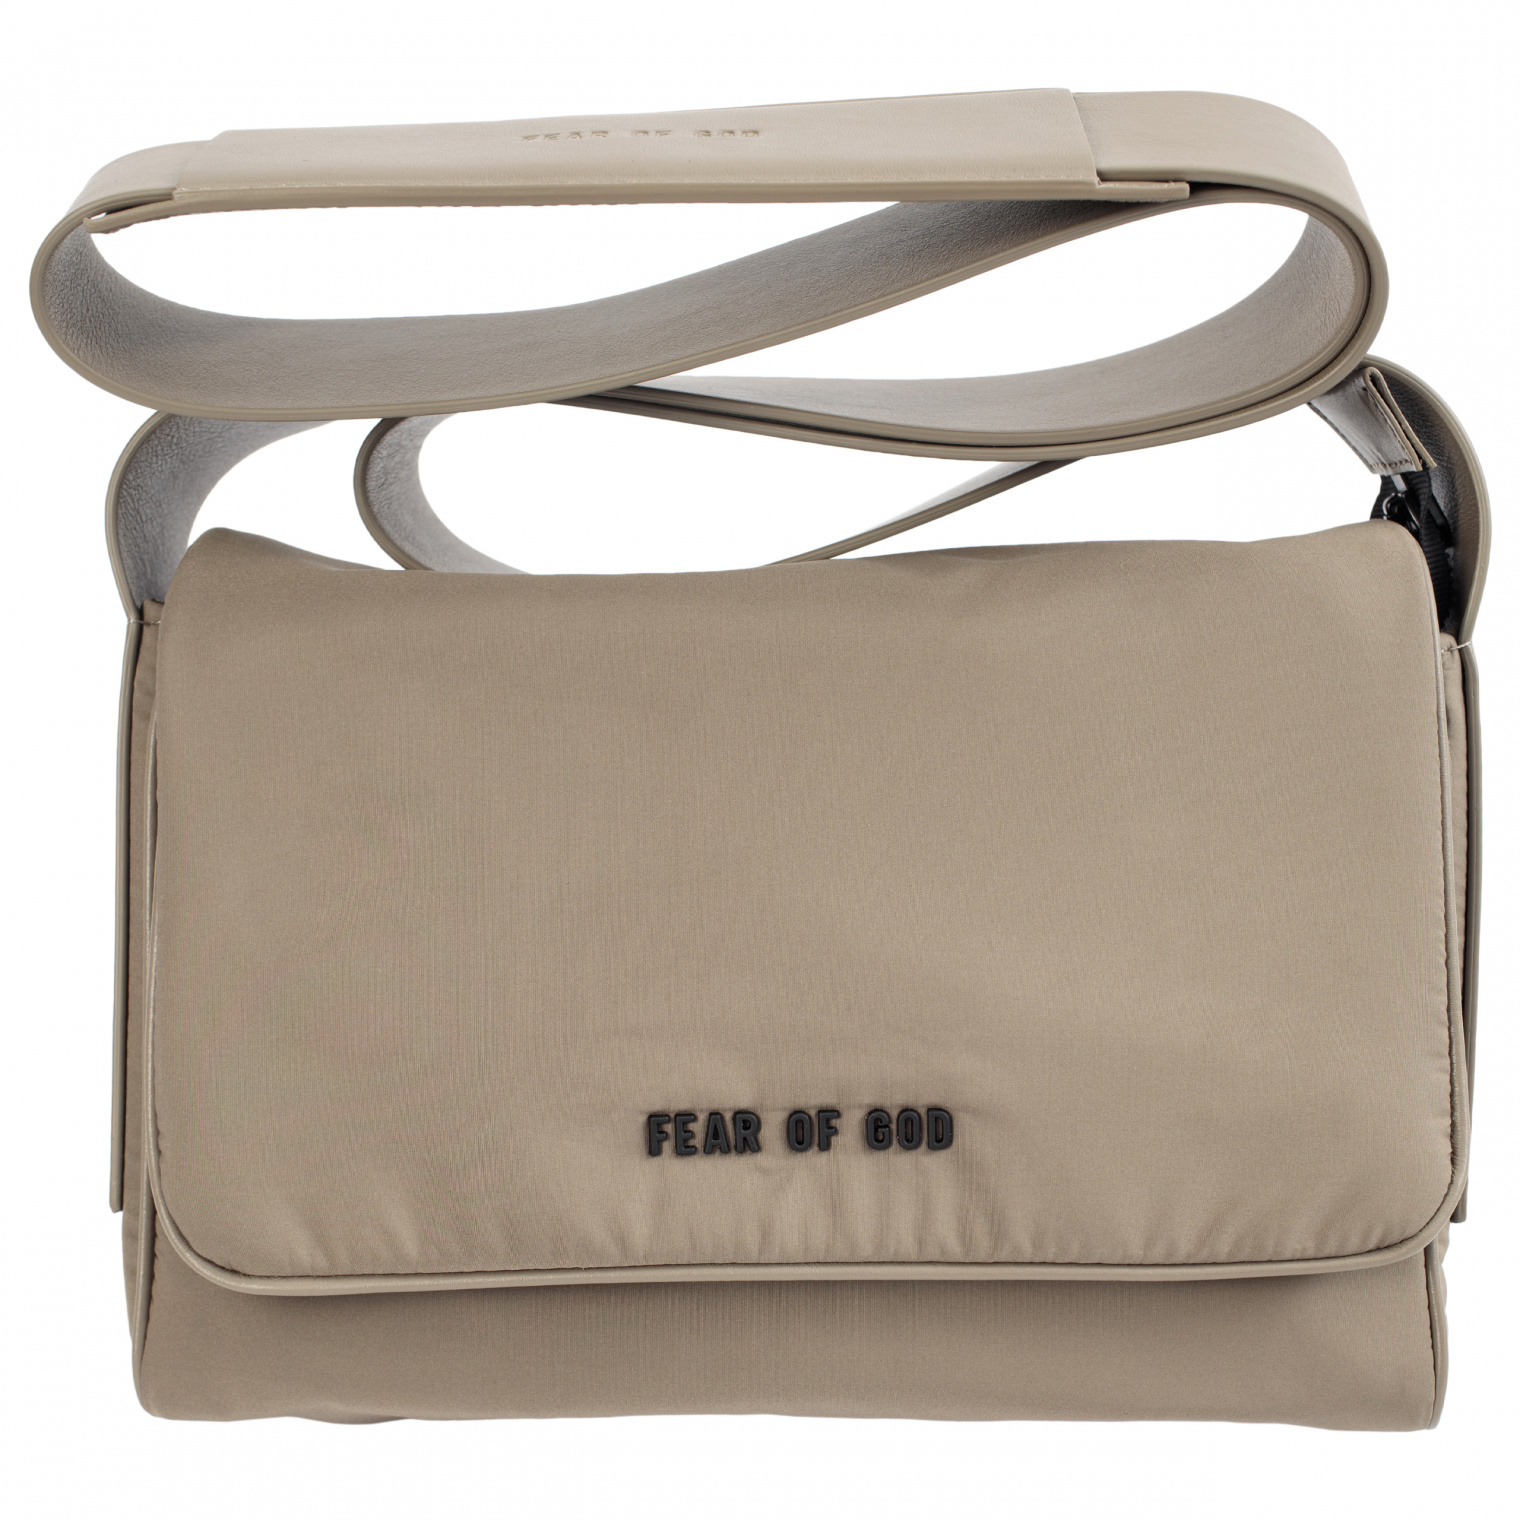 Fear of God Nylon Crossbody bag in beige